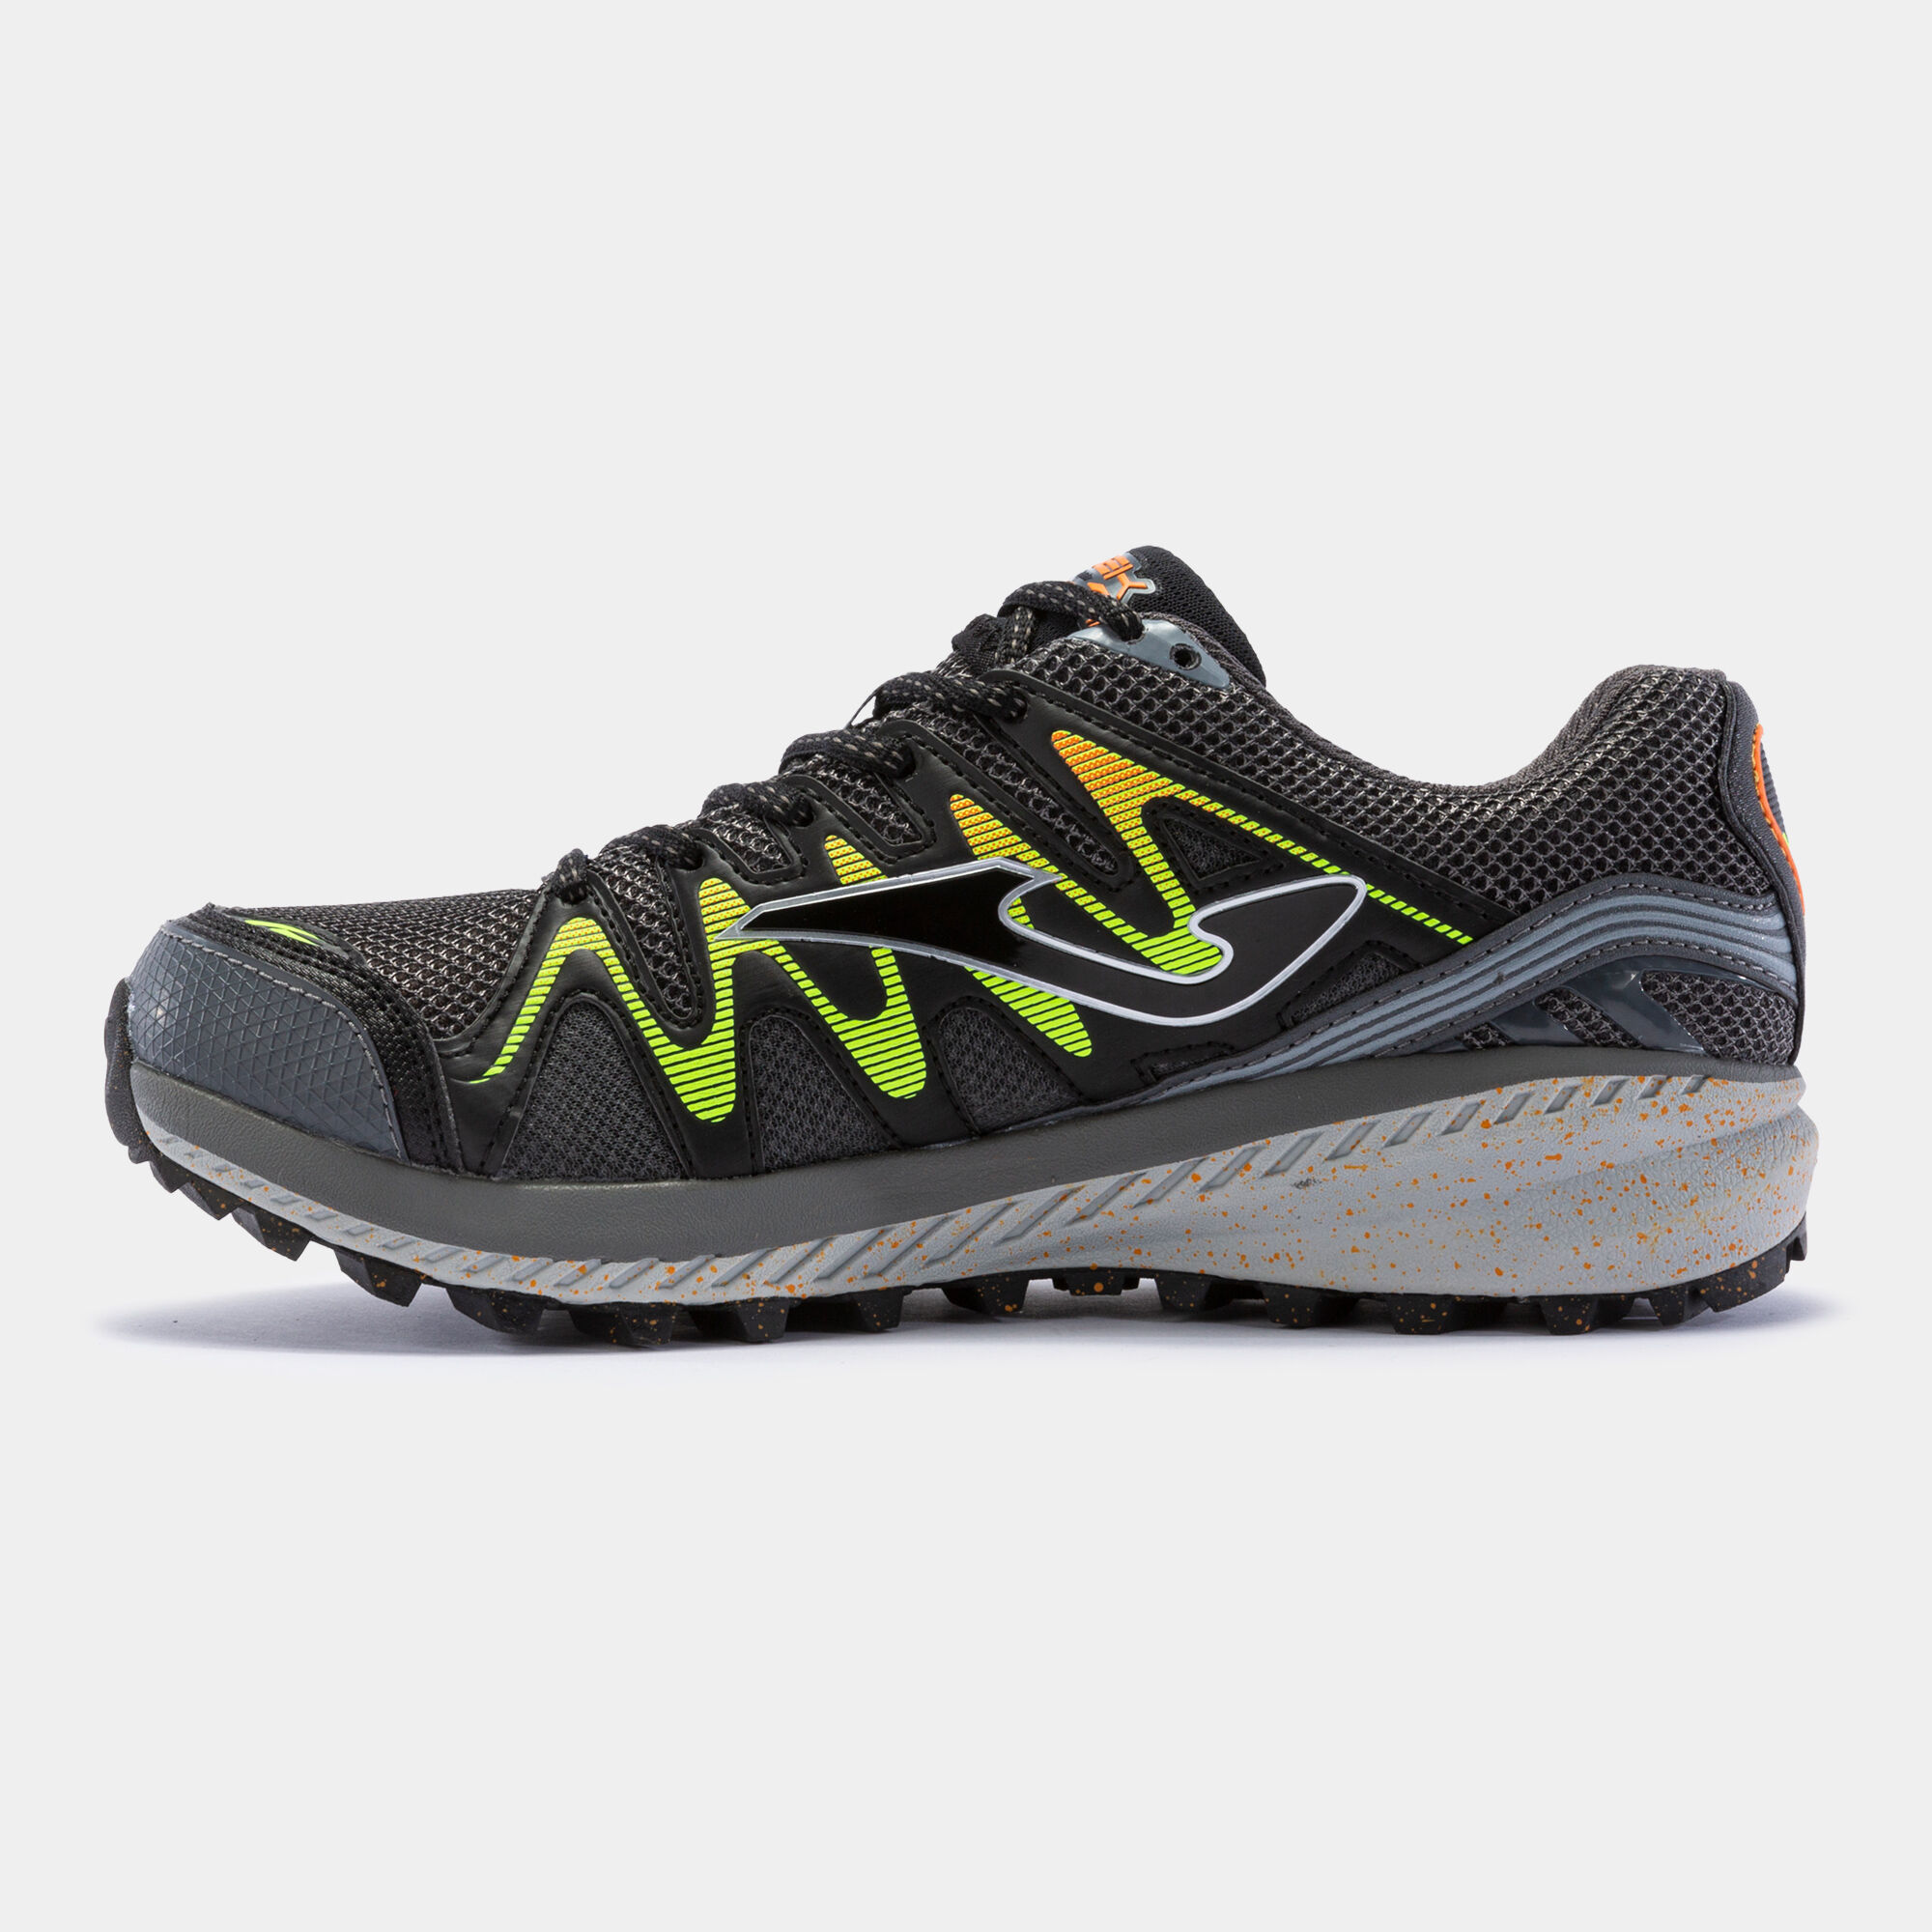 Trail-running shoes Tk.Kubor 23 man gray black red